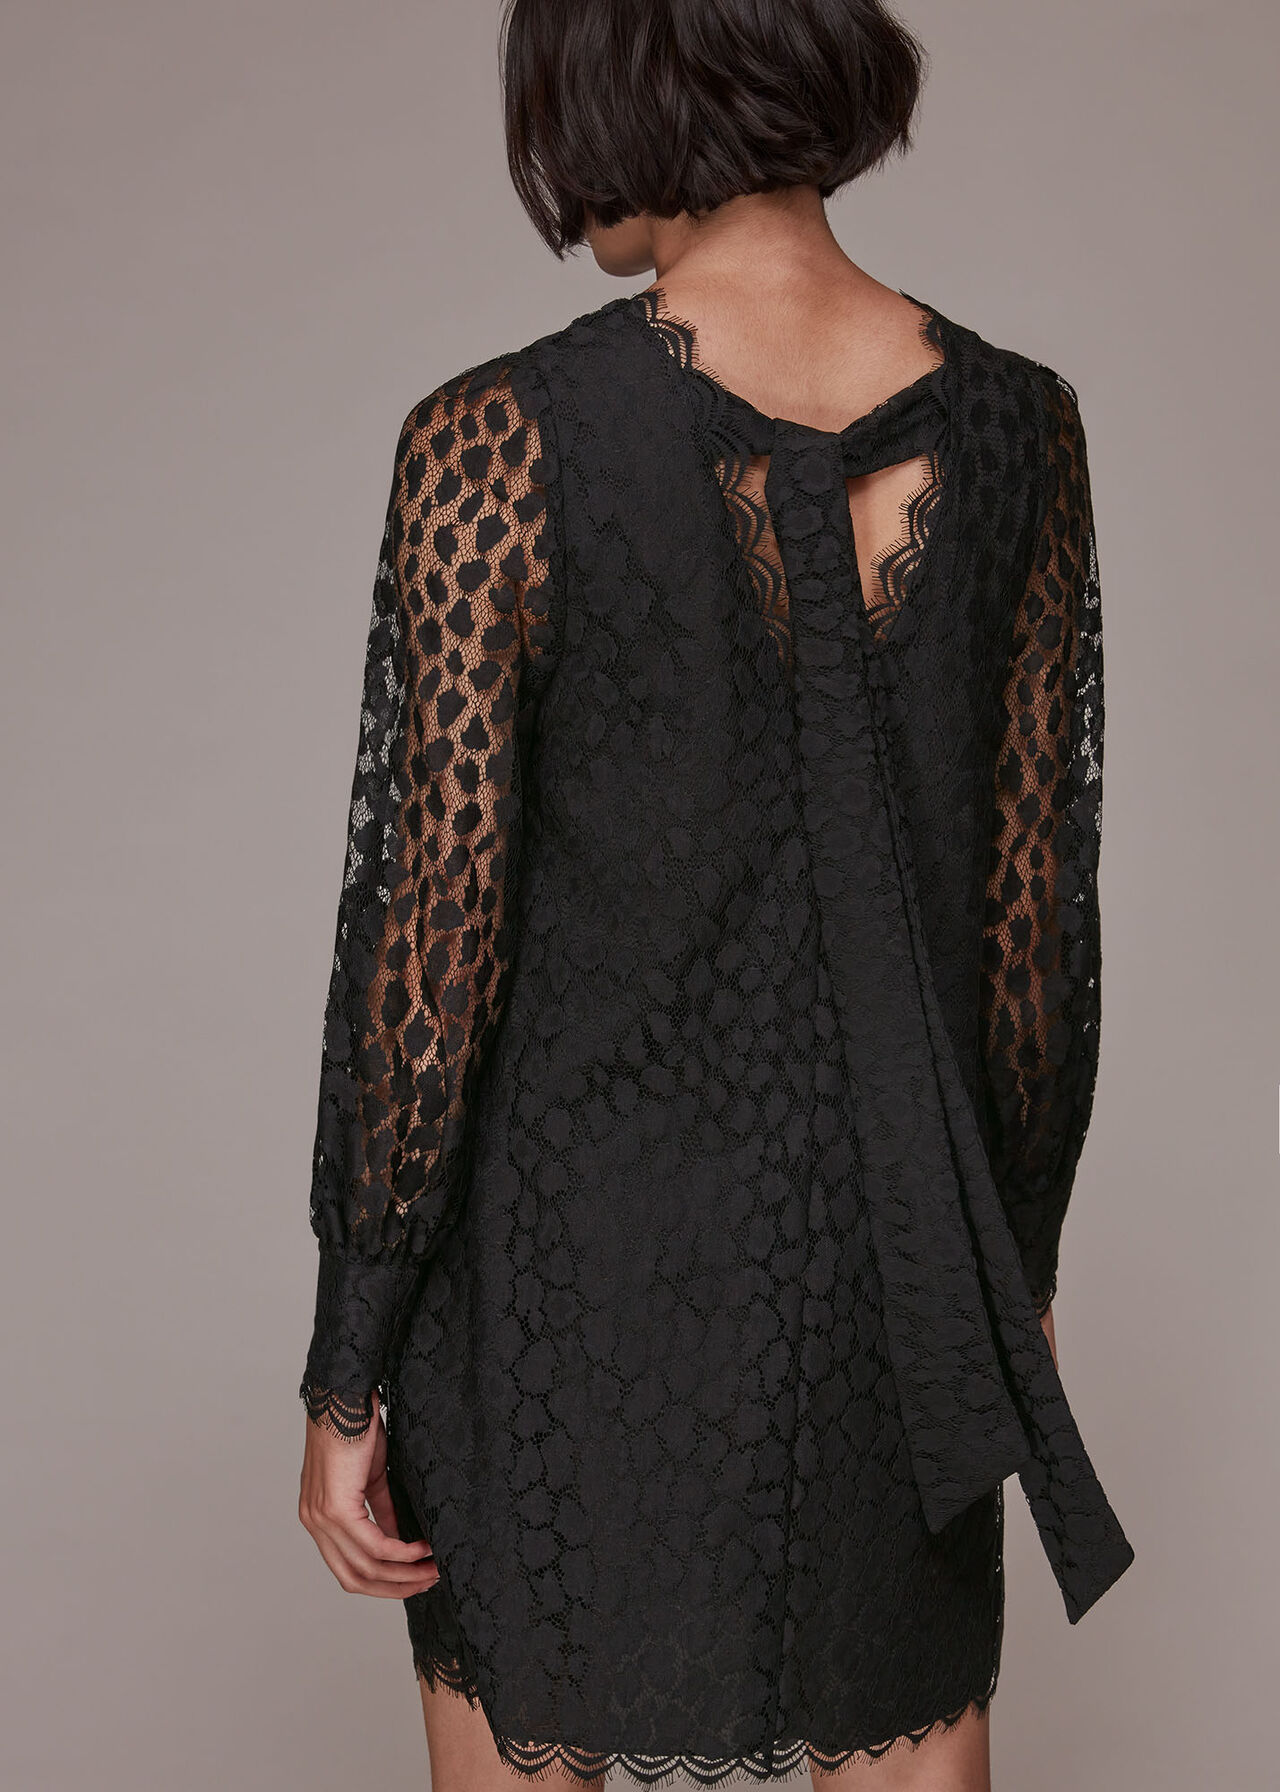 Black Animal Lace Tie Detail Dress | WHISTLES